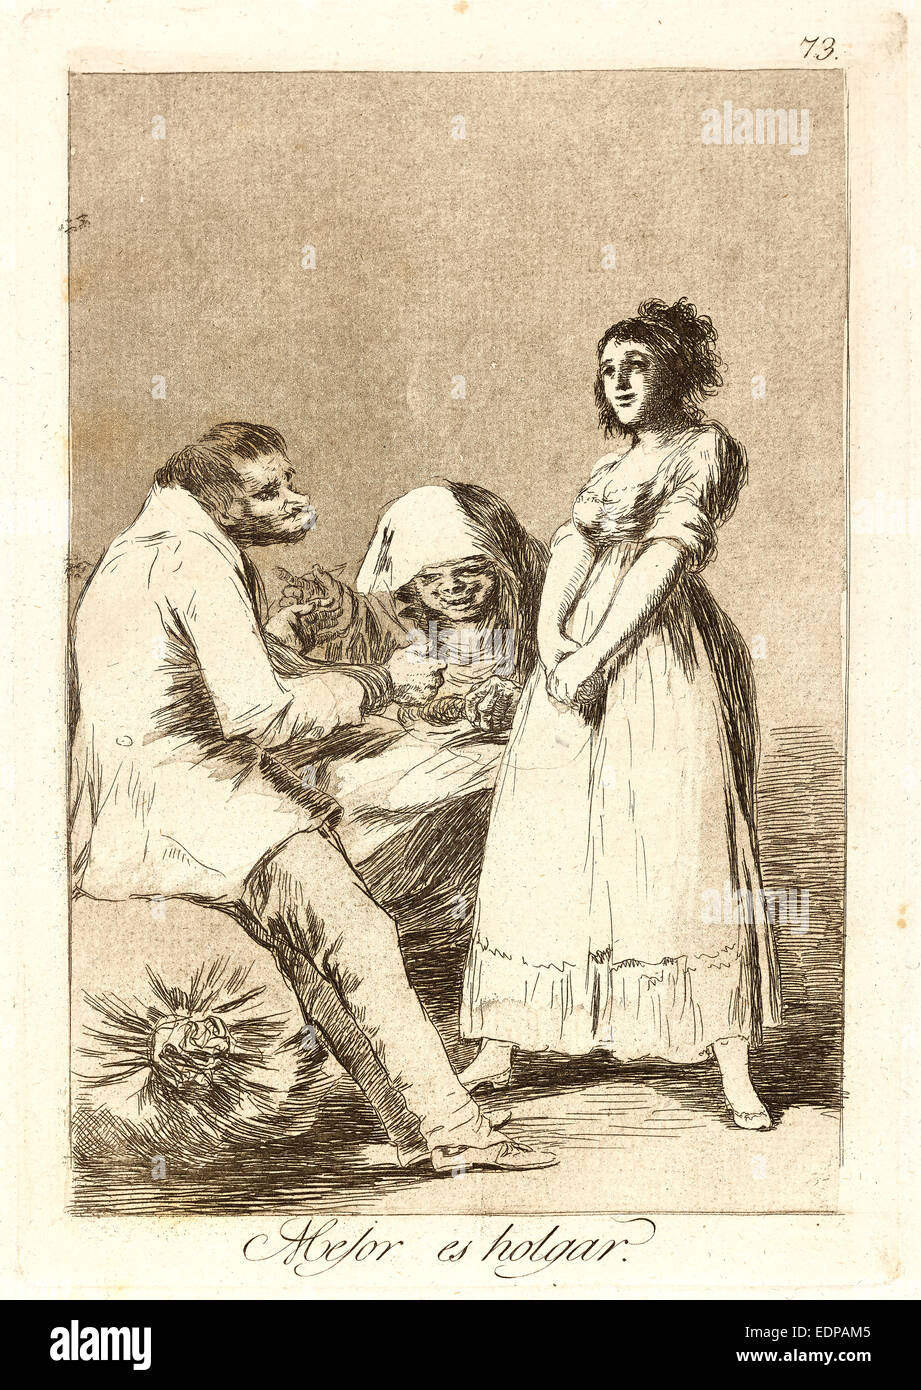 Francisco de Goya (Espagnol, 1746-1828). Mejor es holgar. (C'est mieux d'être paresseux.), 1796-1797. De Los Caprichos, no. 73 Banque D'Images